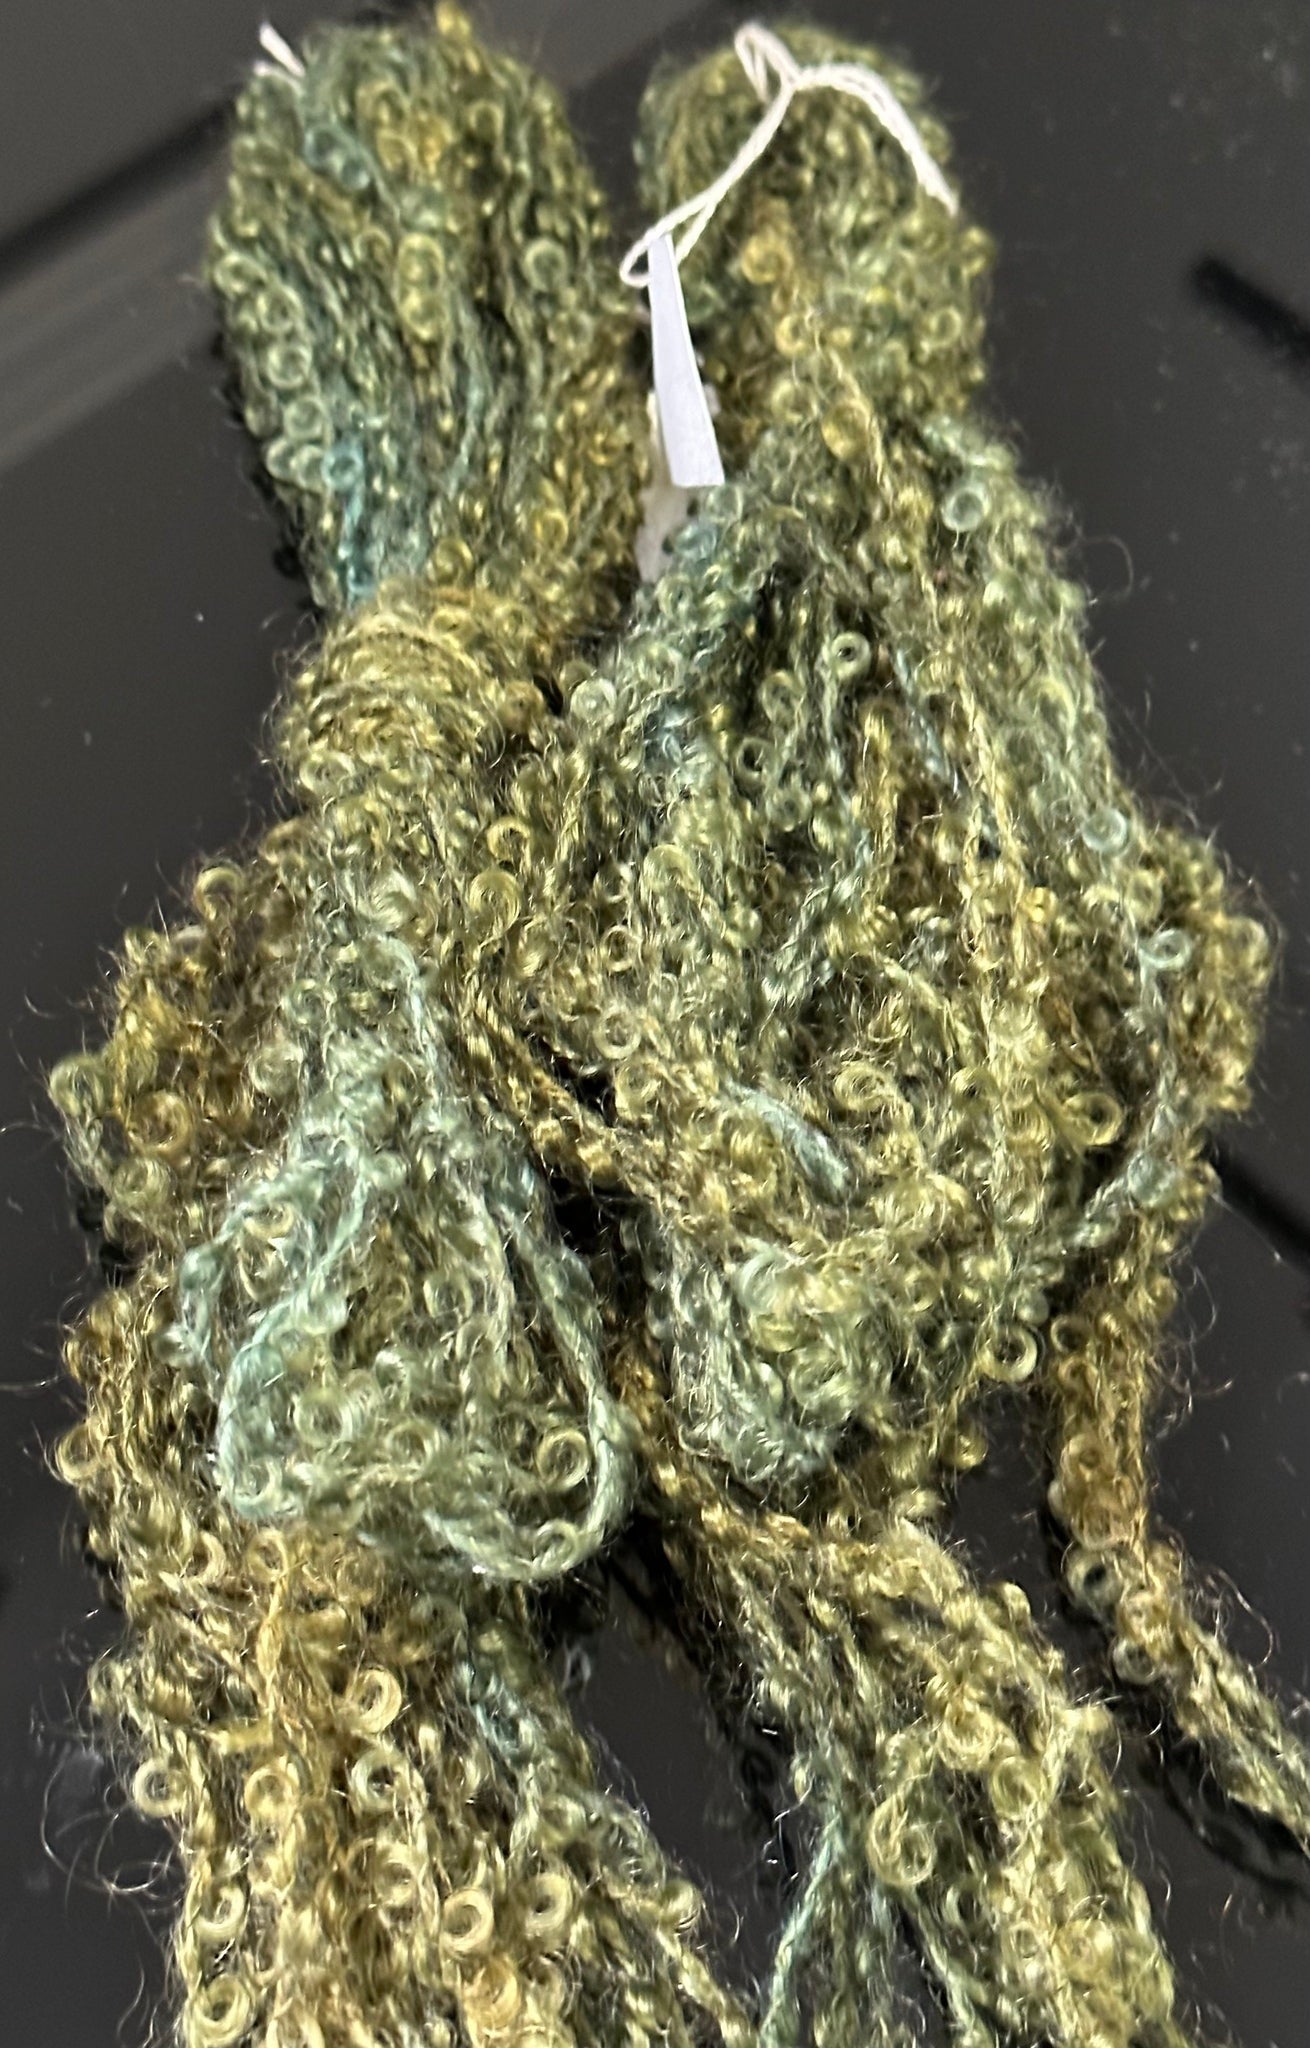 Curly Locks Moss Wool Bundle